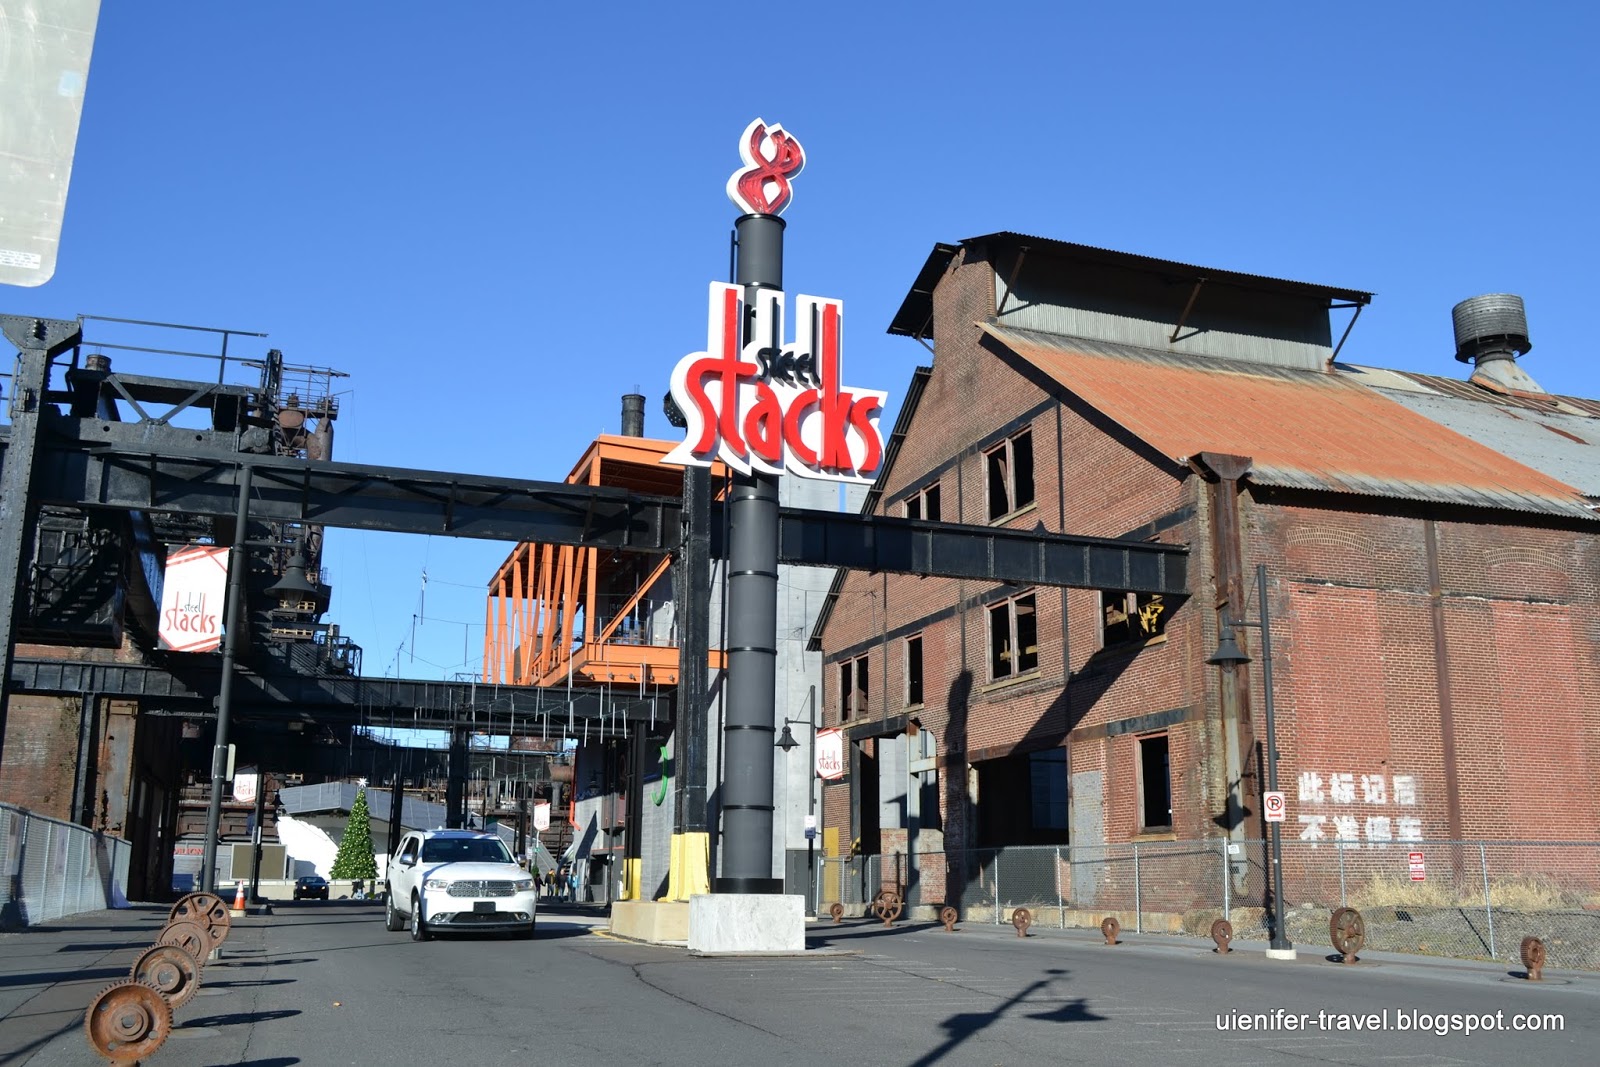 Завод Бетлехем Стил, Бетлехем, Пенсильвания (Bethlehem Steel, Bethlehem, Pennsylvania)